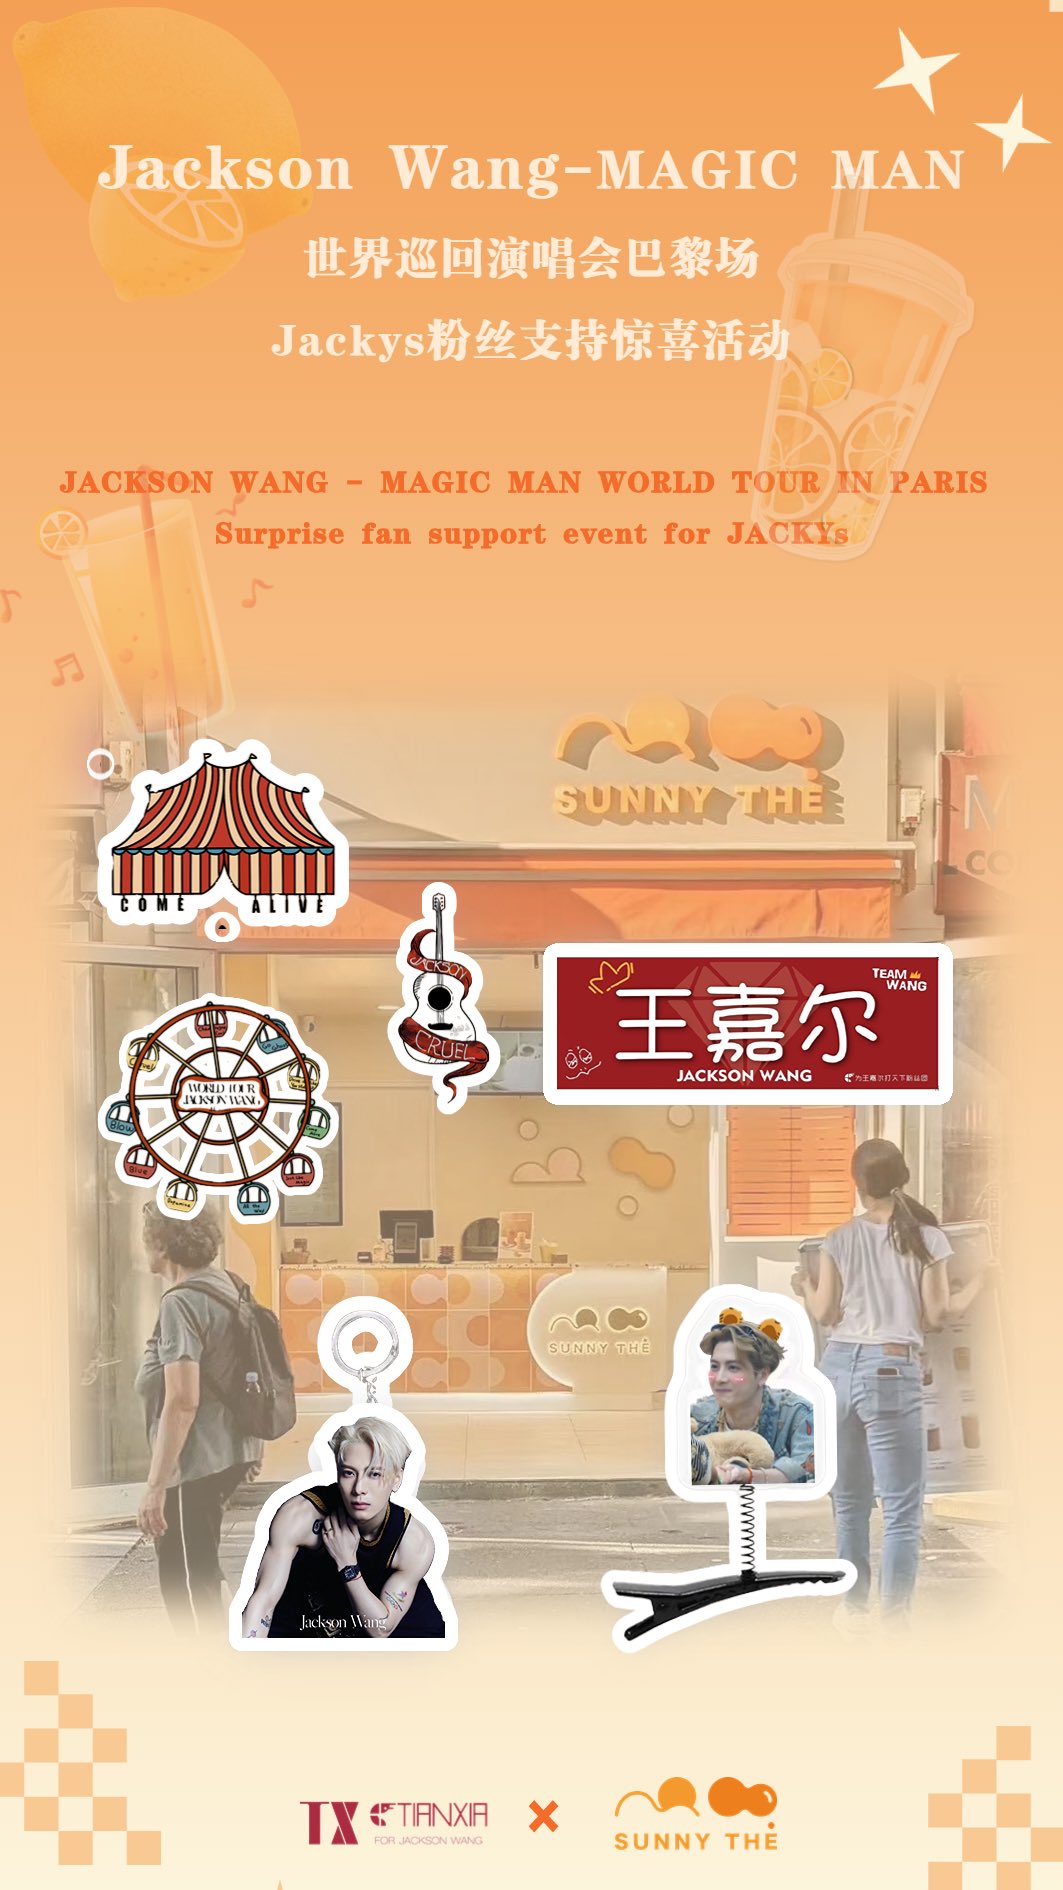 Jackson Wang Will Return To Malaysia For Magic Man World Tour